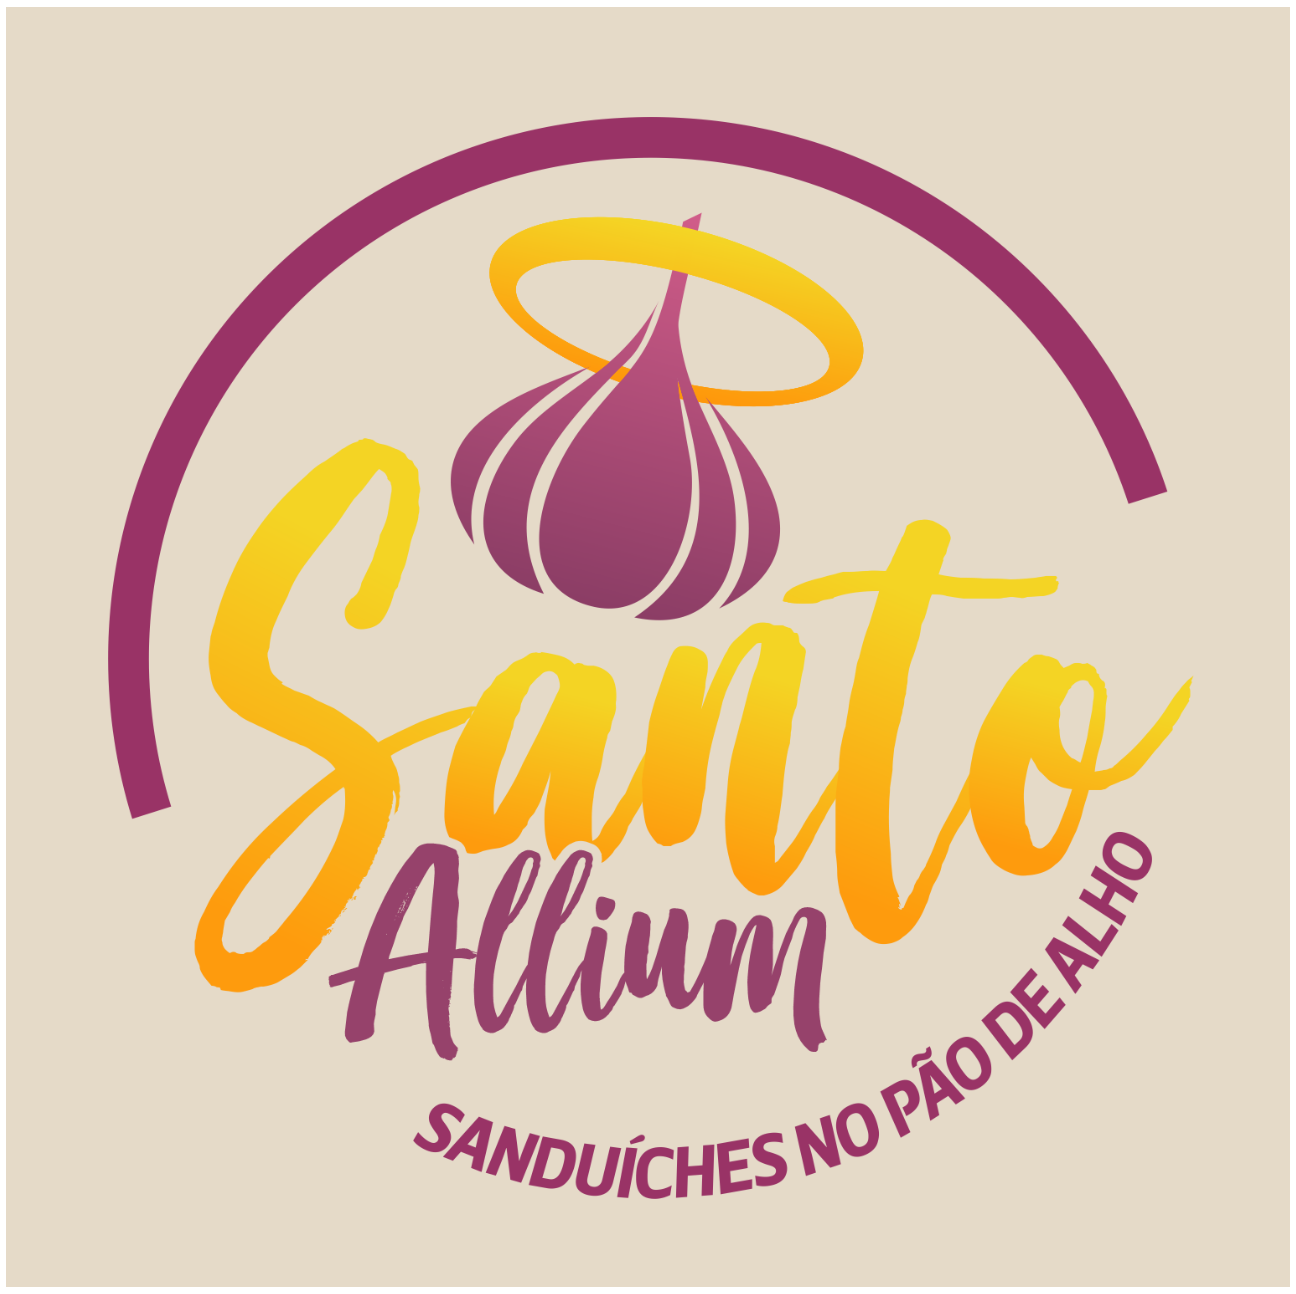 Logo-Lanchonete - Santo Allium - Sanduíches no Pão de Alho